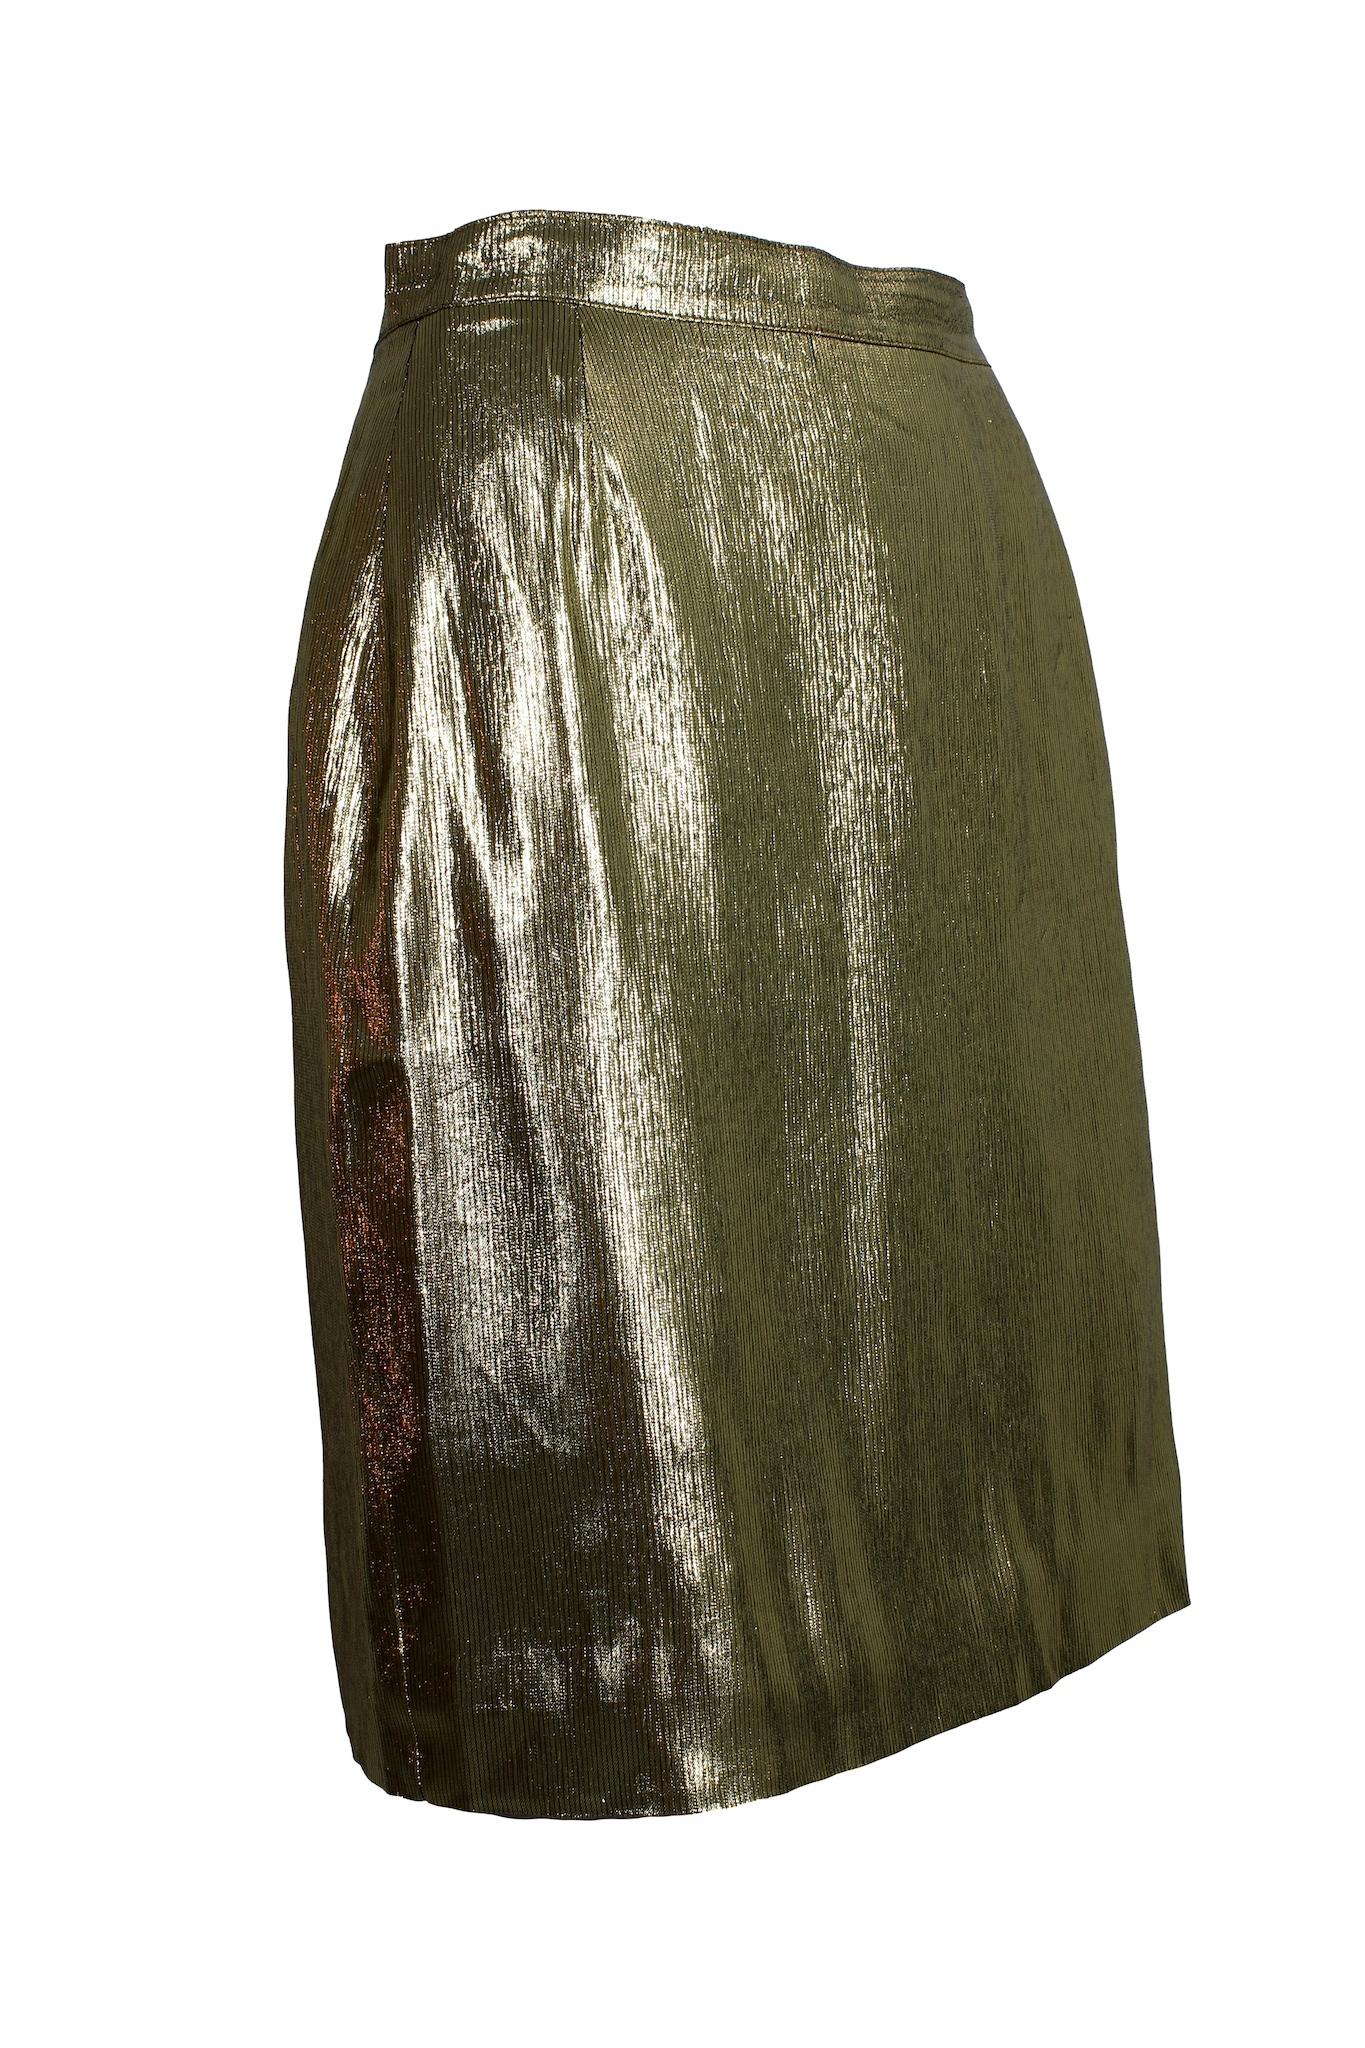 Genny Gold Silk Lurex Evening Short Skirt 1980s In Excellent Condition For Sale In Brindisi, Bt